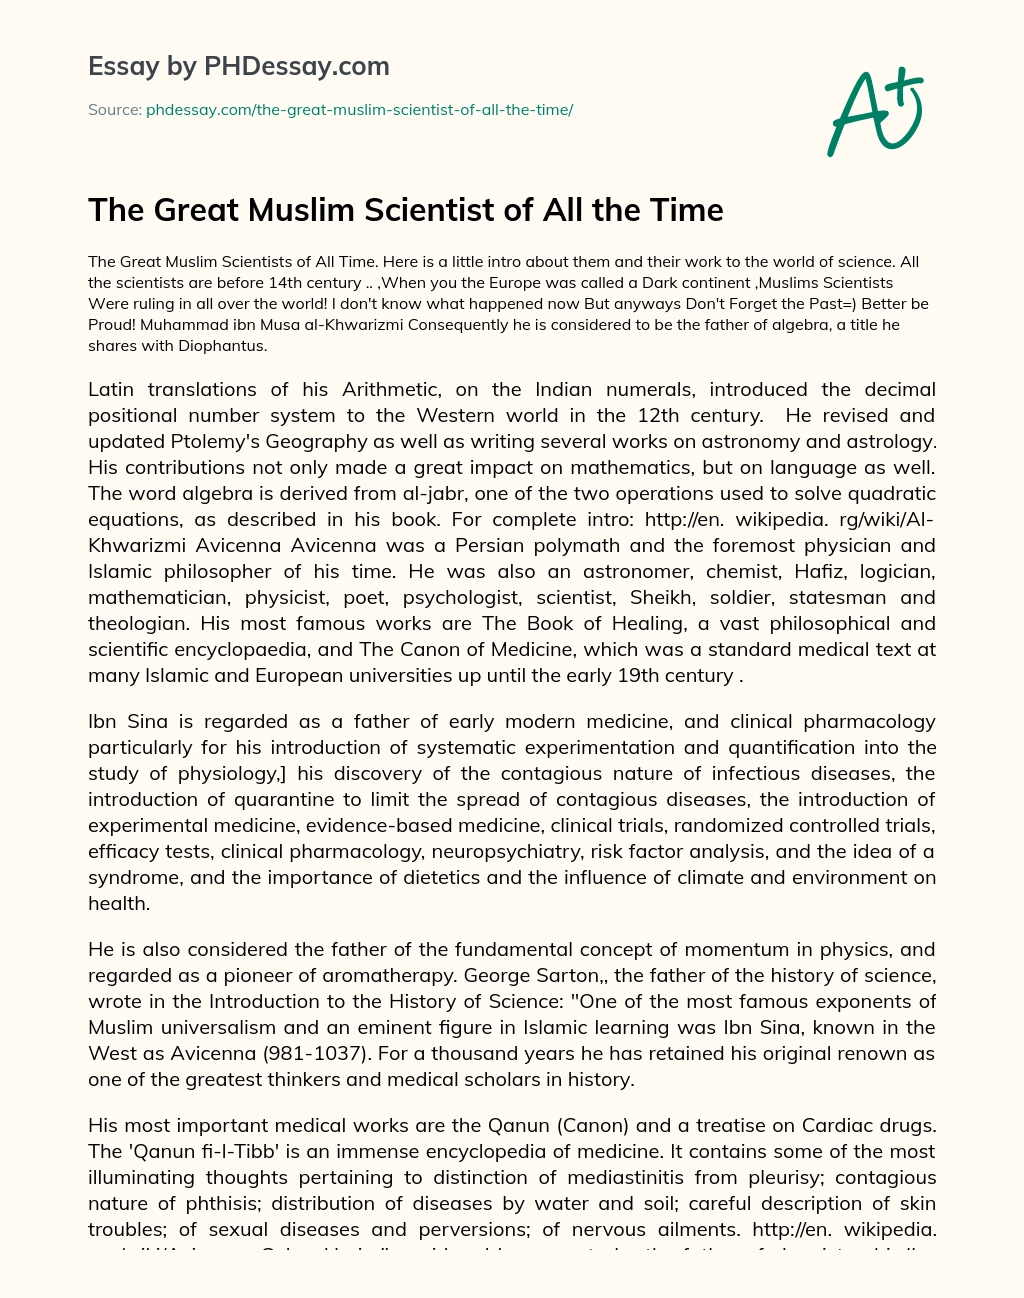 essay on muslim scientist